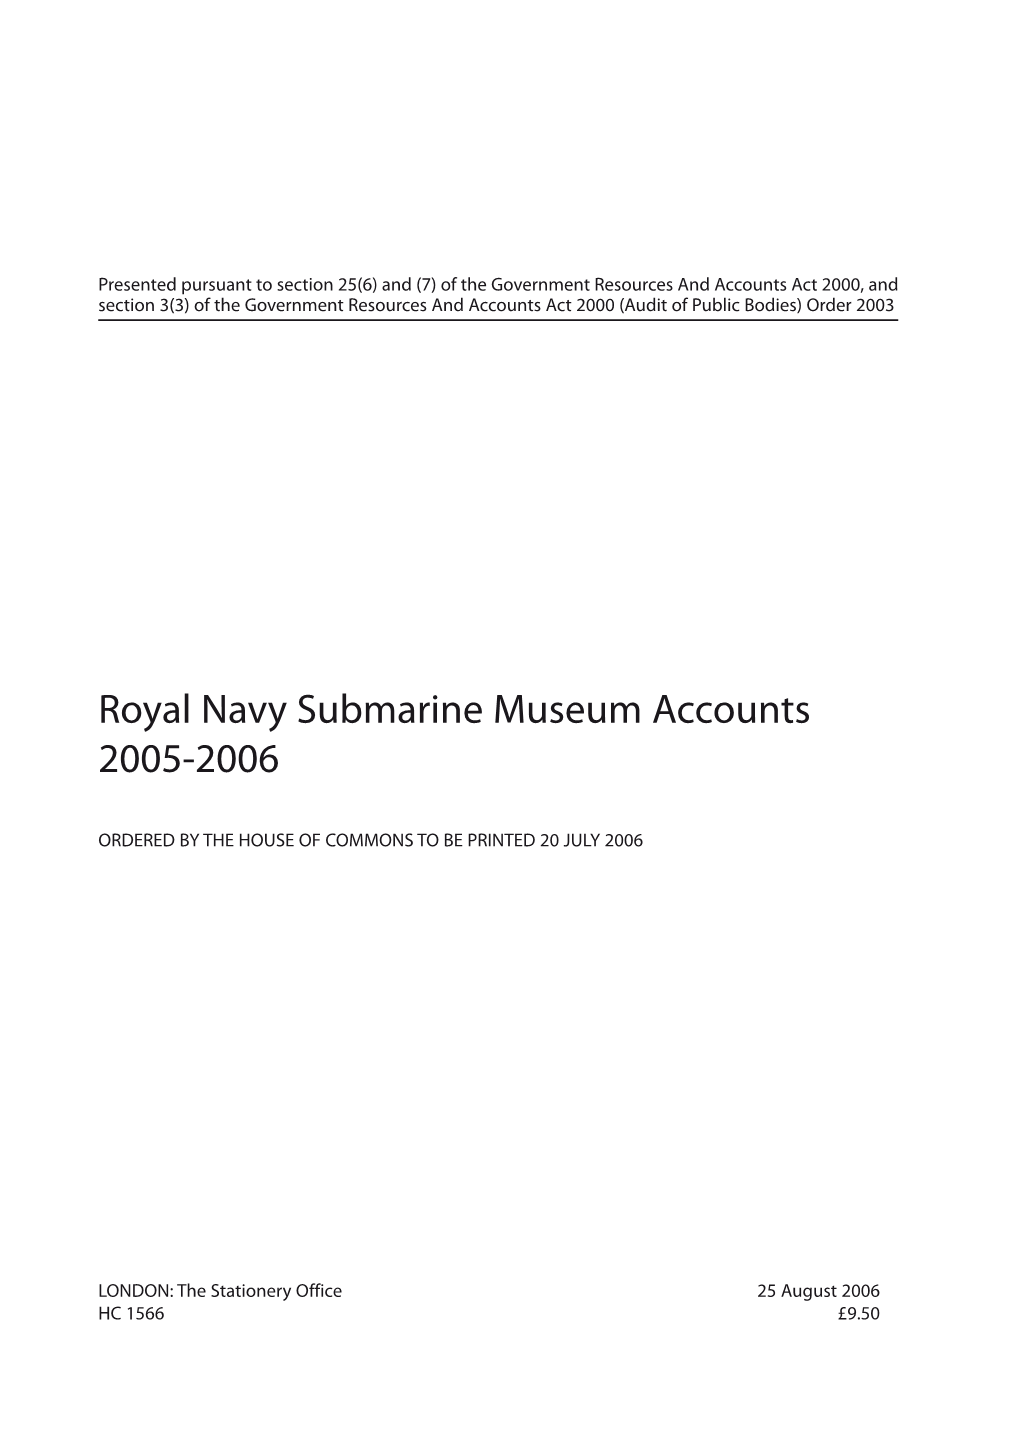 Royal Navy Submarine Museum Accounts 2005-2006 HC 1566